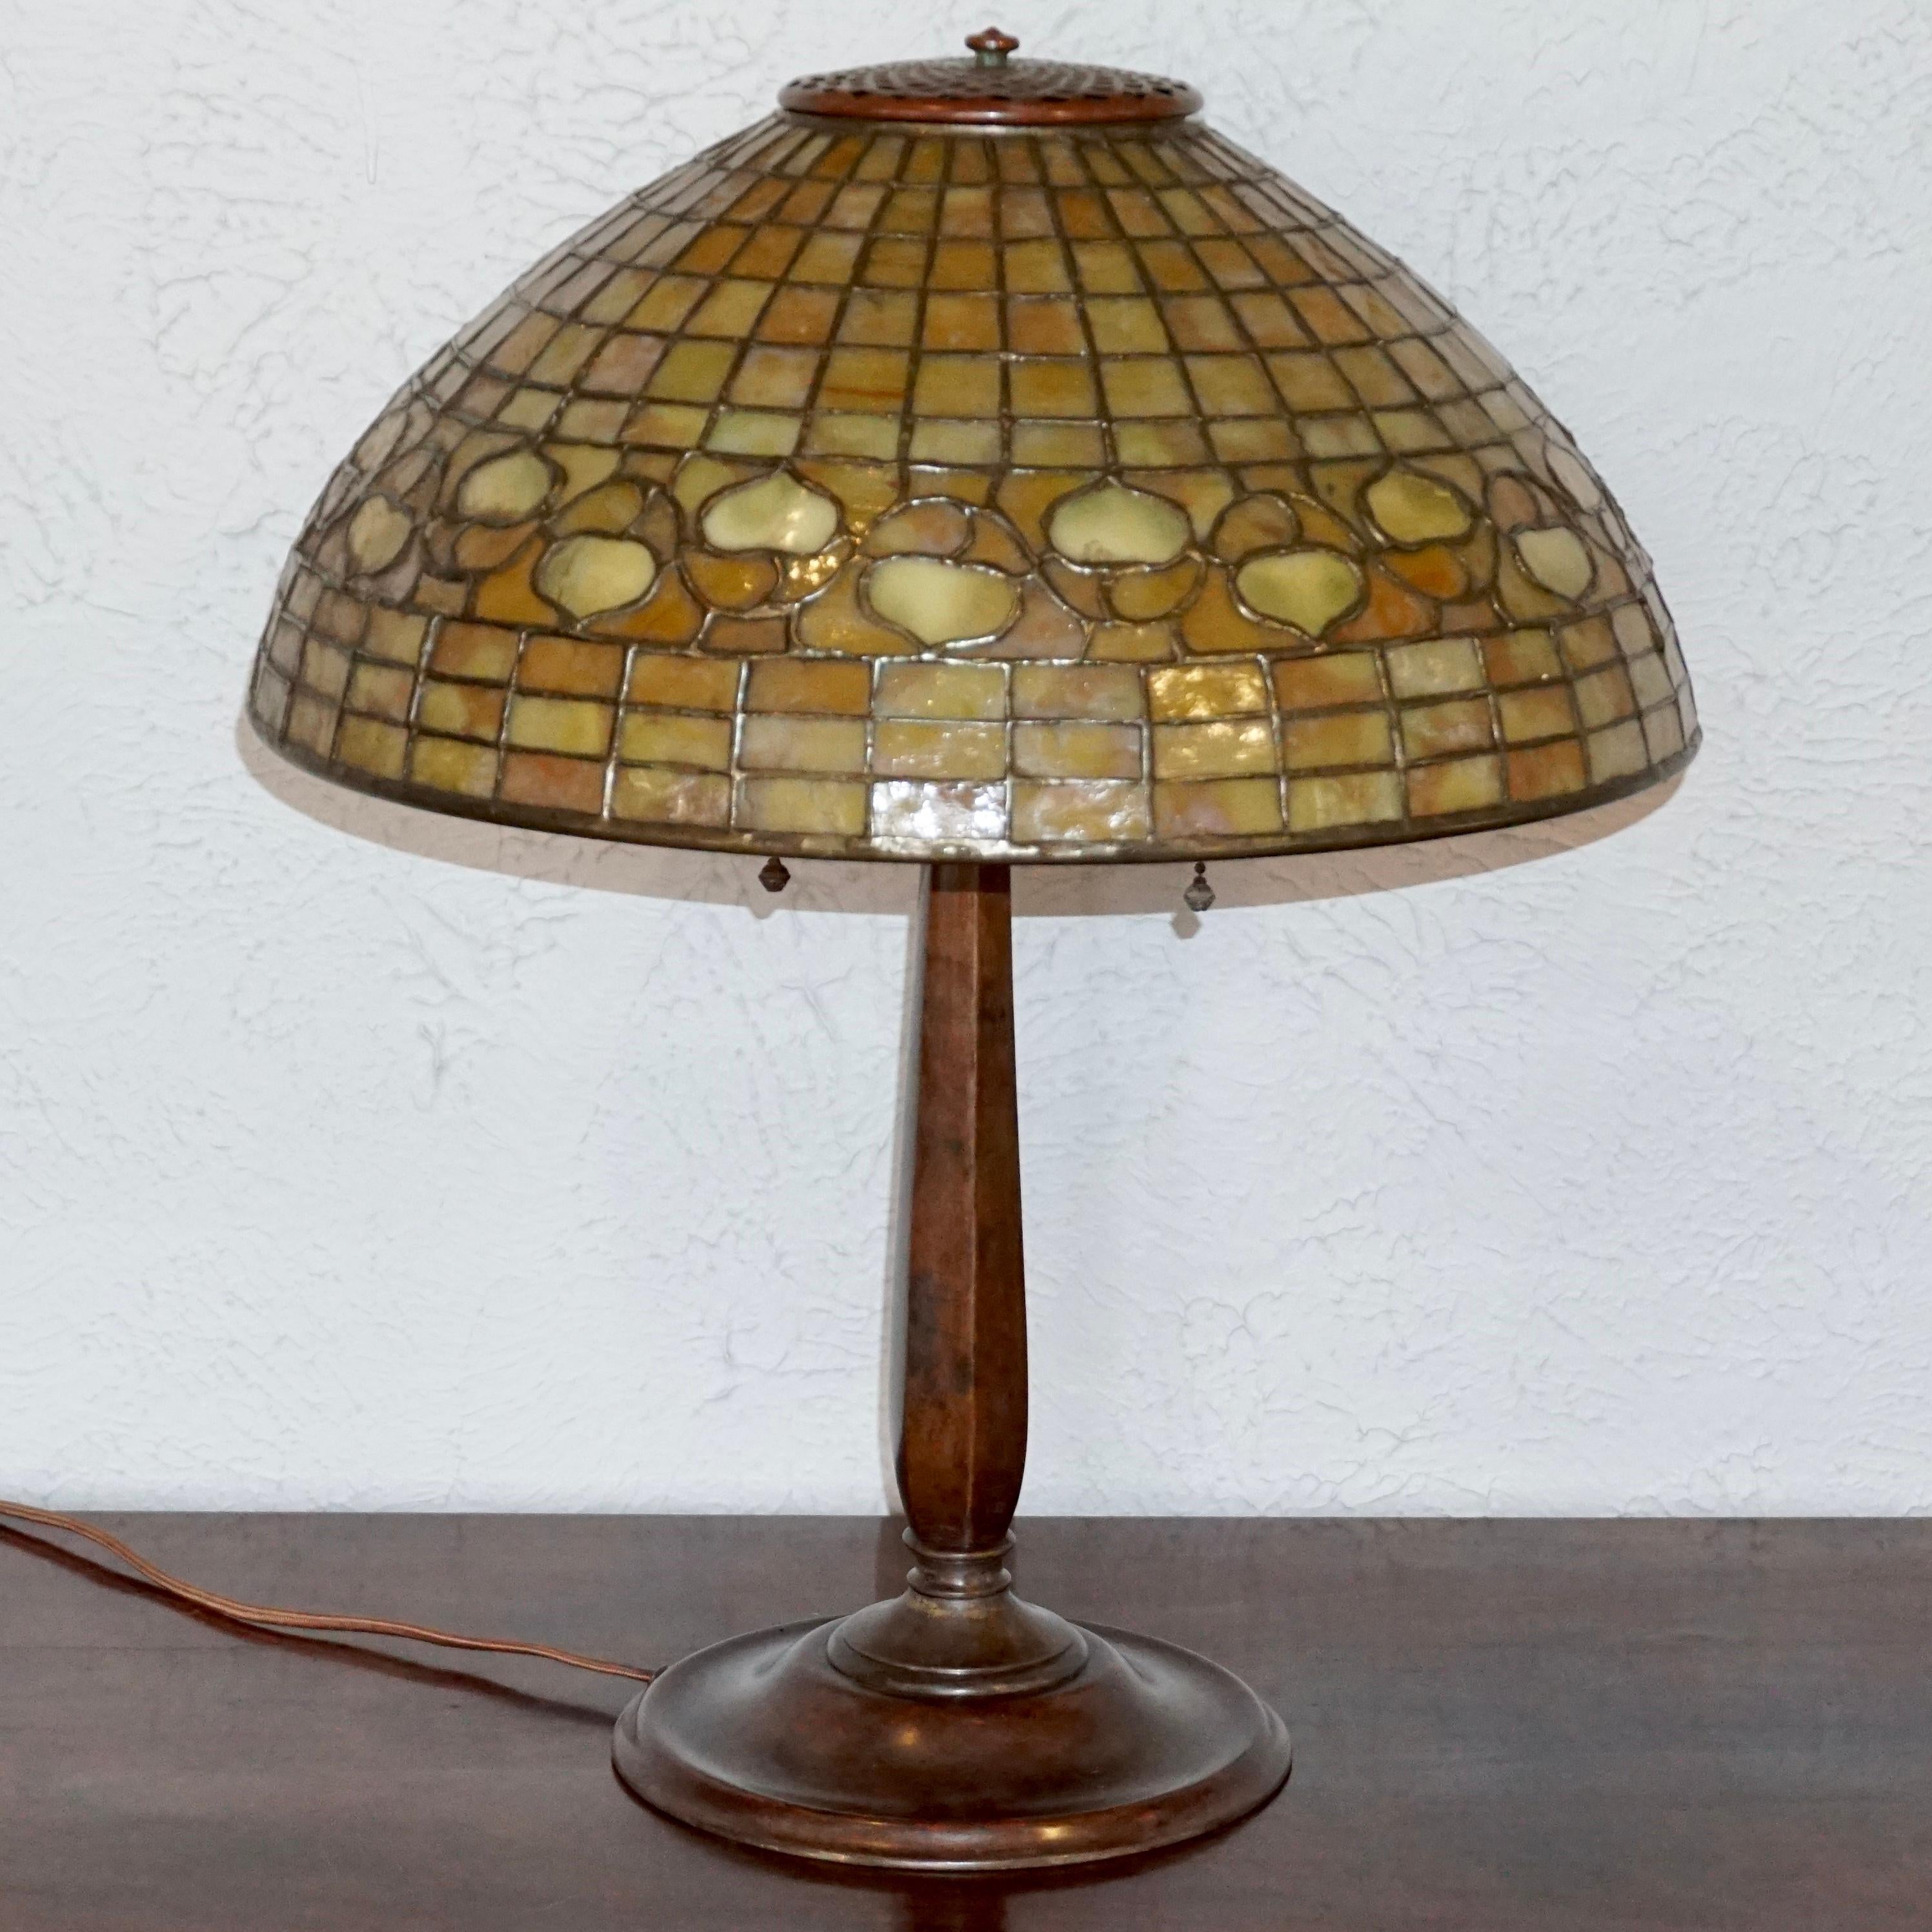 Art Nouveau Tiffany Studios “Acorn” Table Lamp